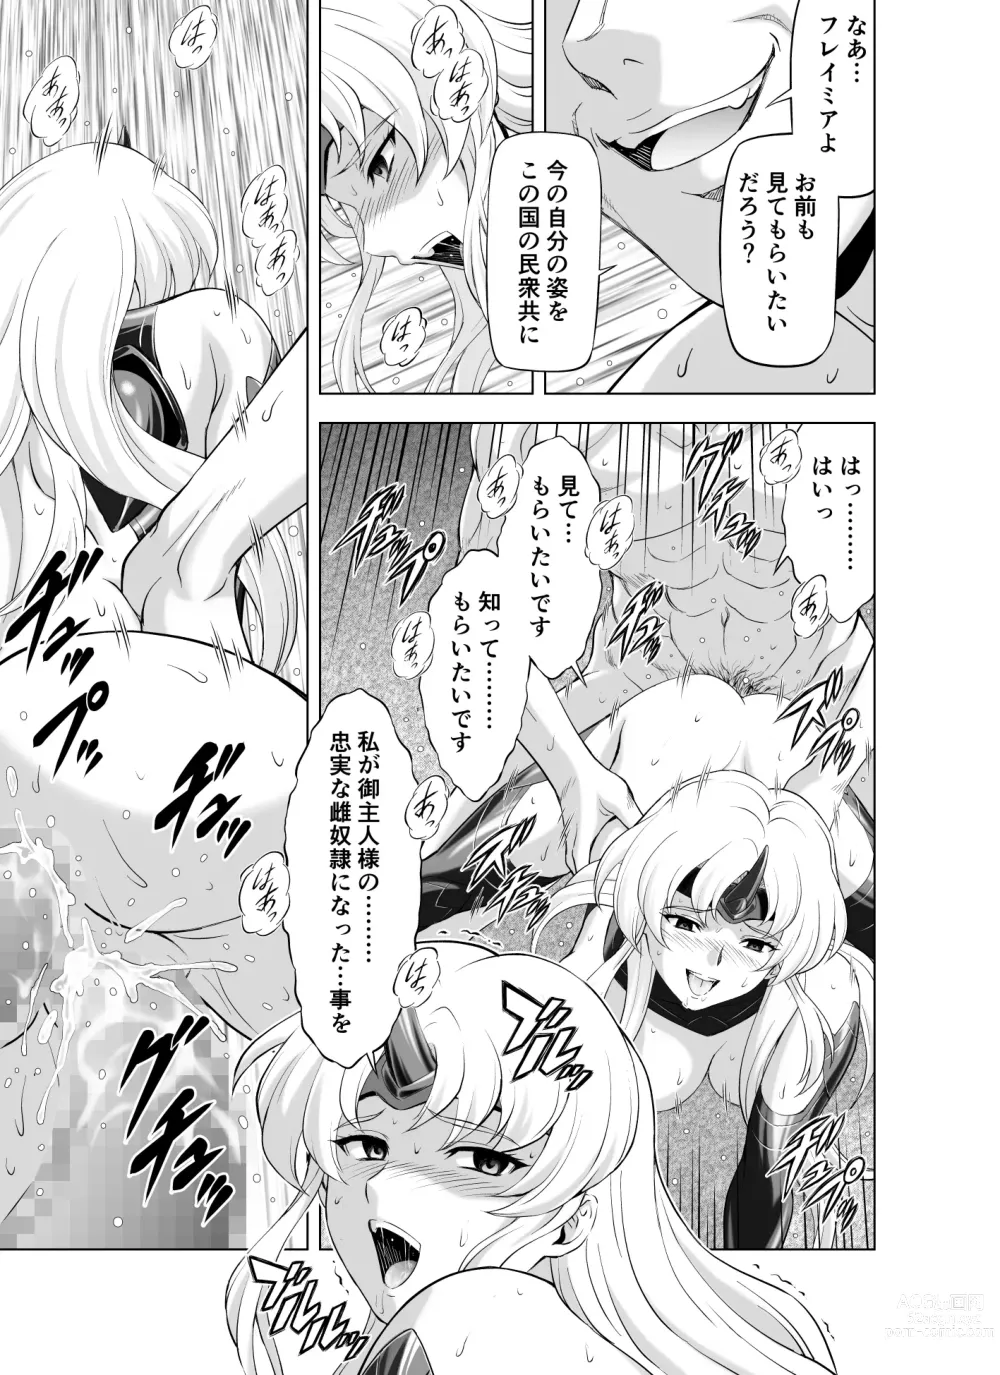 Page 9 of doujinshi Reties no Michibiki Vol. 9